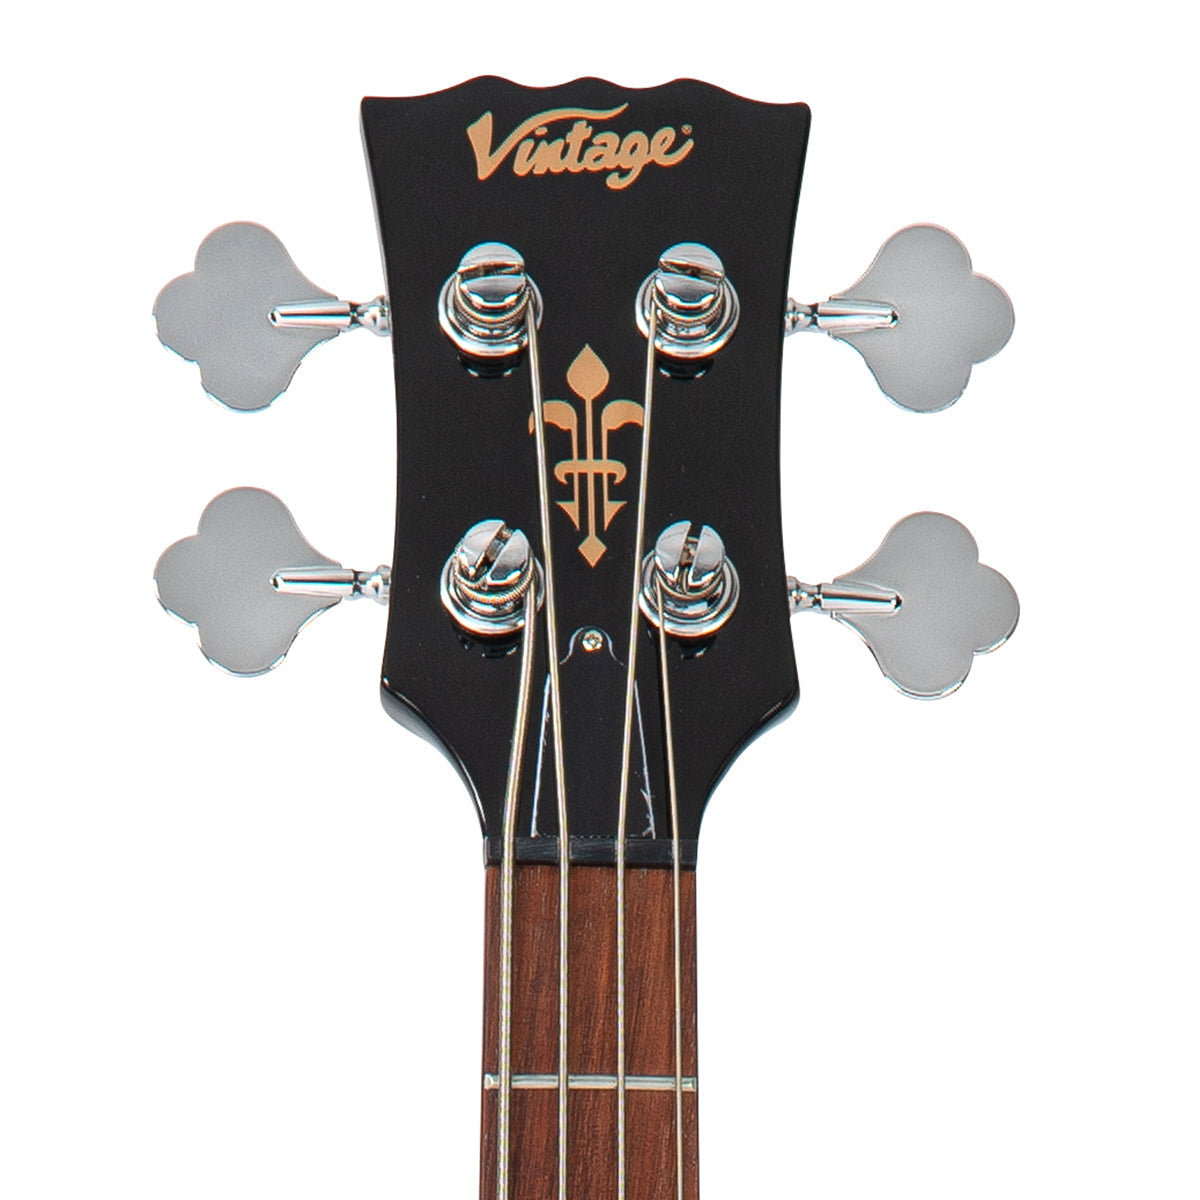 Vintage VS4 ReIssued Bass Guitar ~ Boulevard Black, Bass Guitar for sale at Richards Guitars.